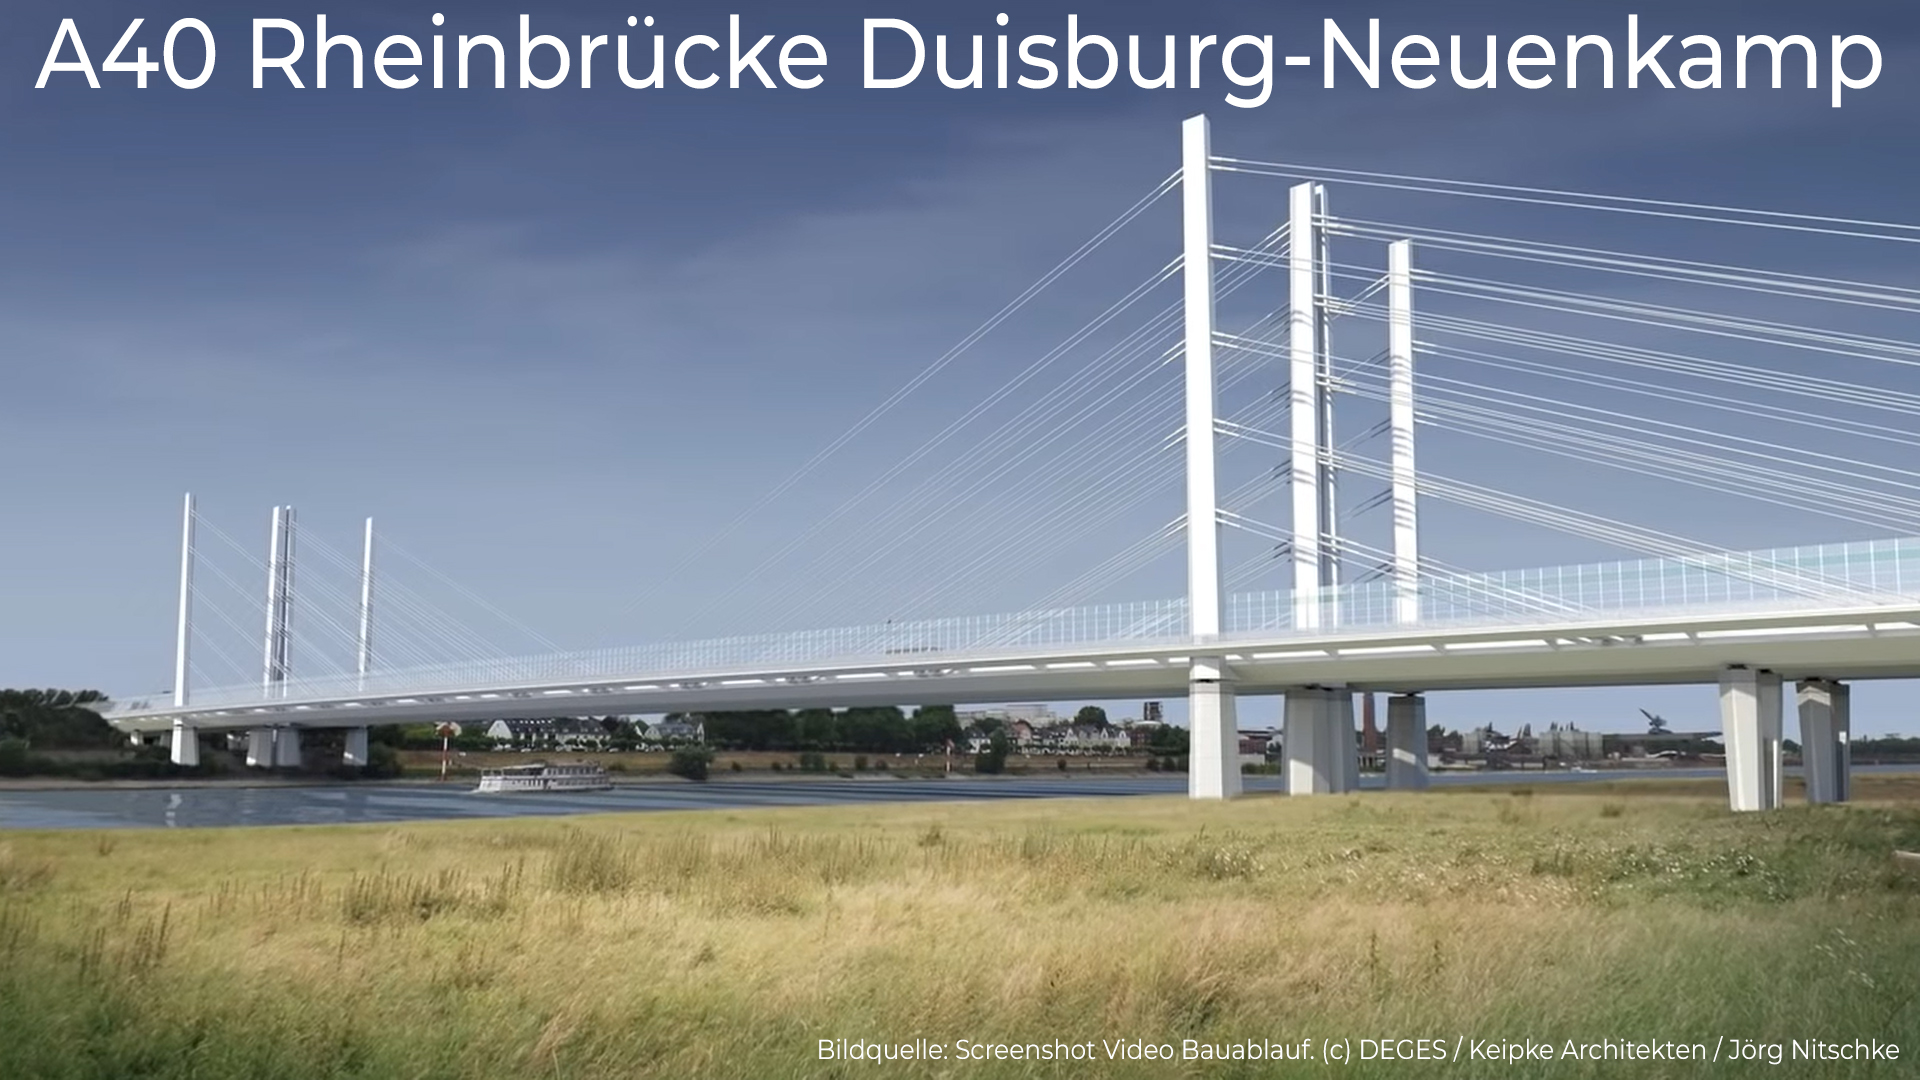 Bild: Screenshot Video Bauablauf. (c) DEGES / Keipke Architekten / Jörg Nitschke